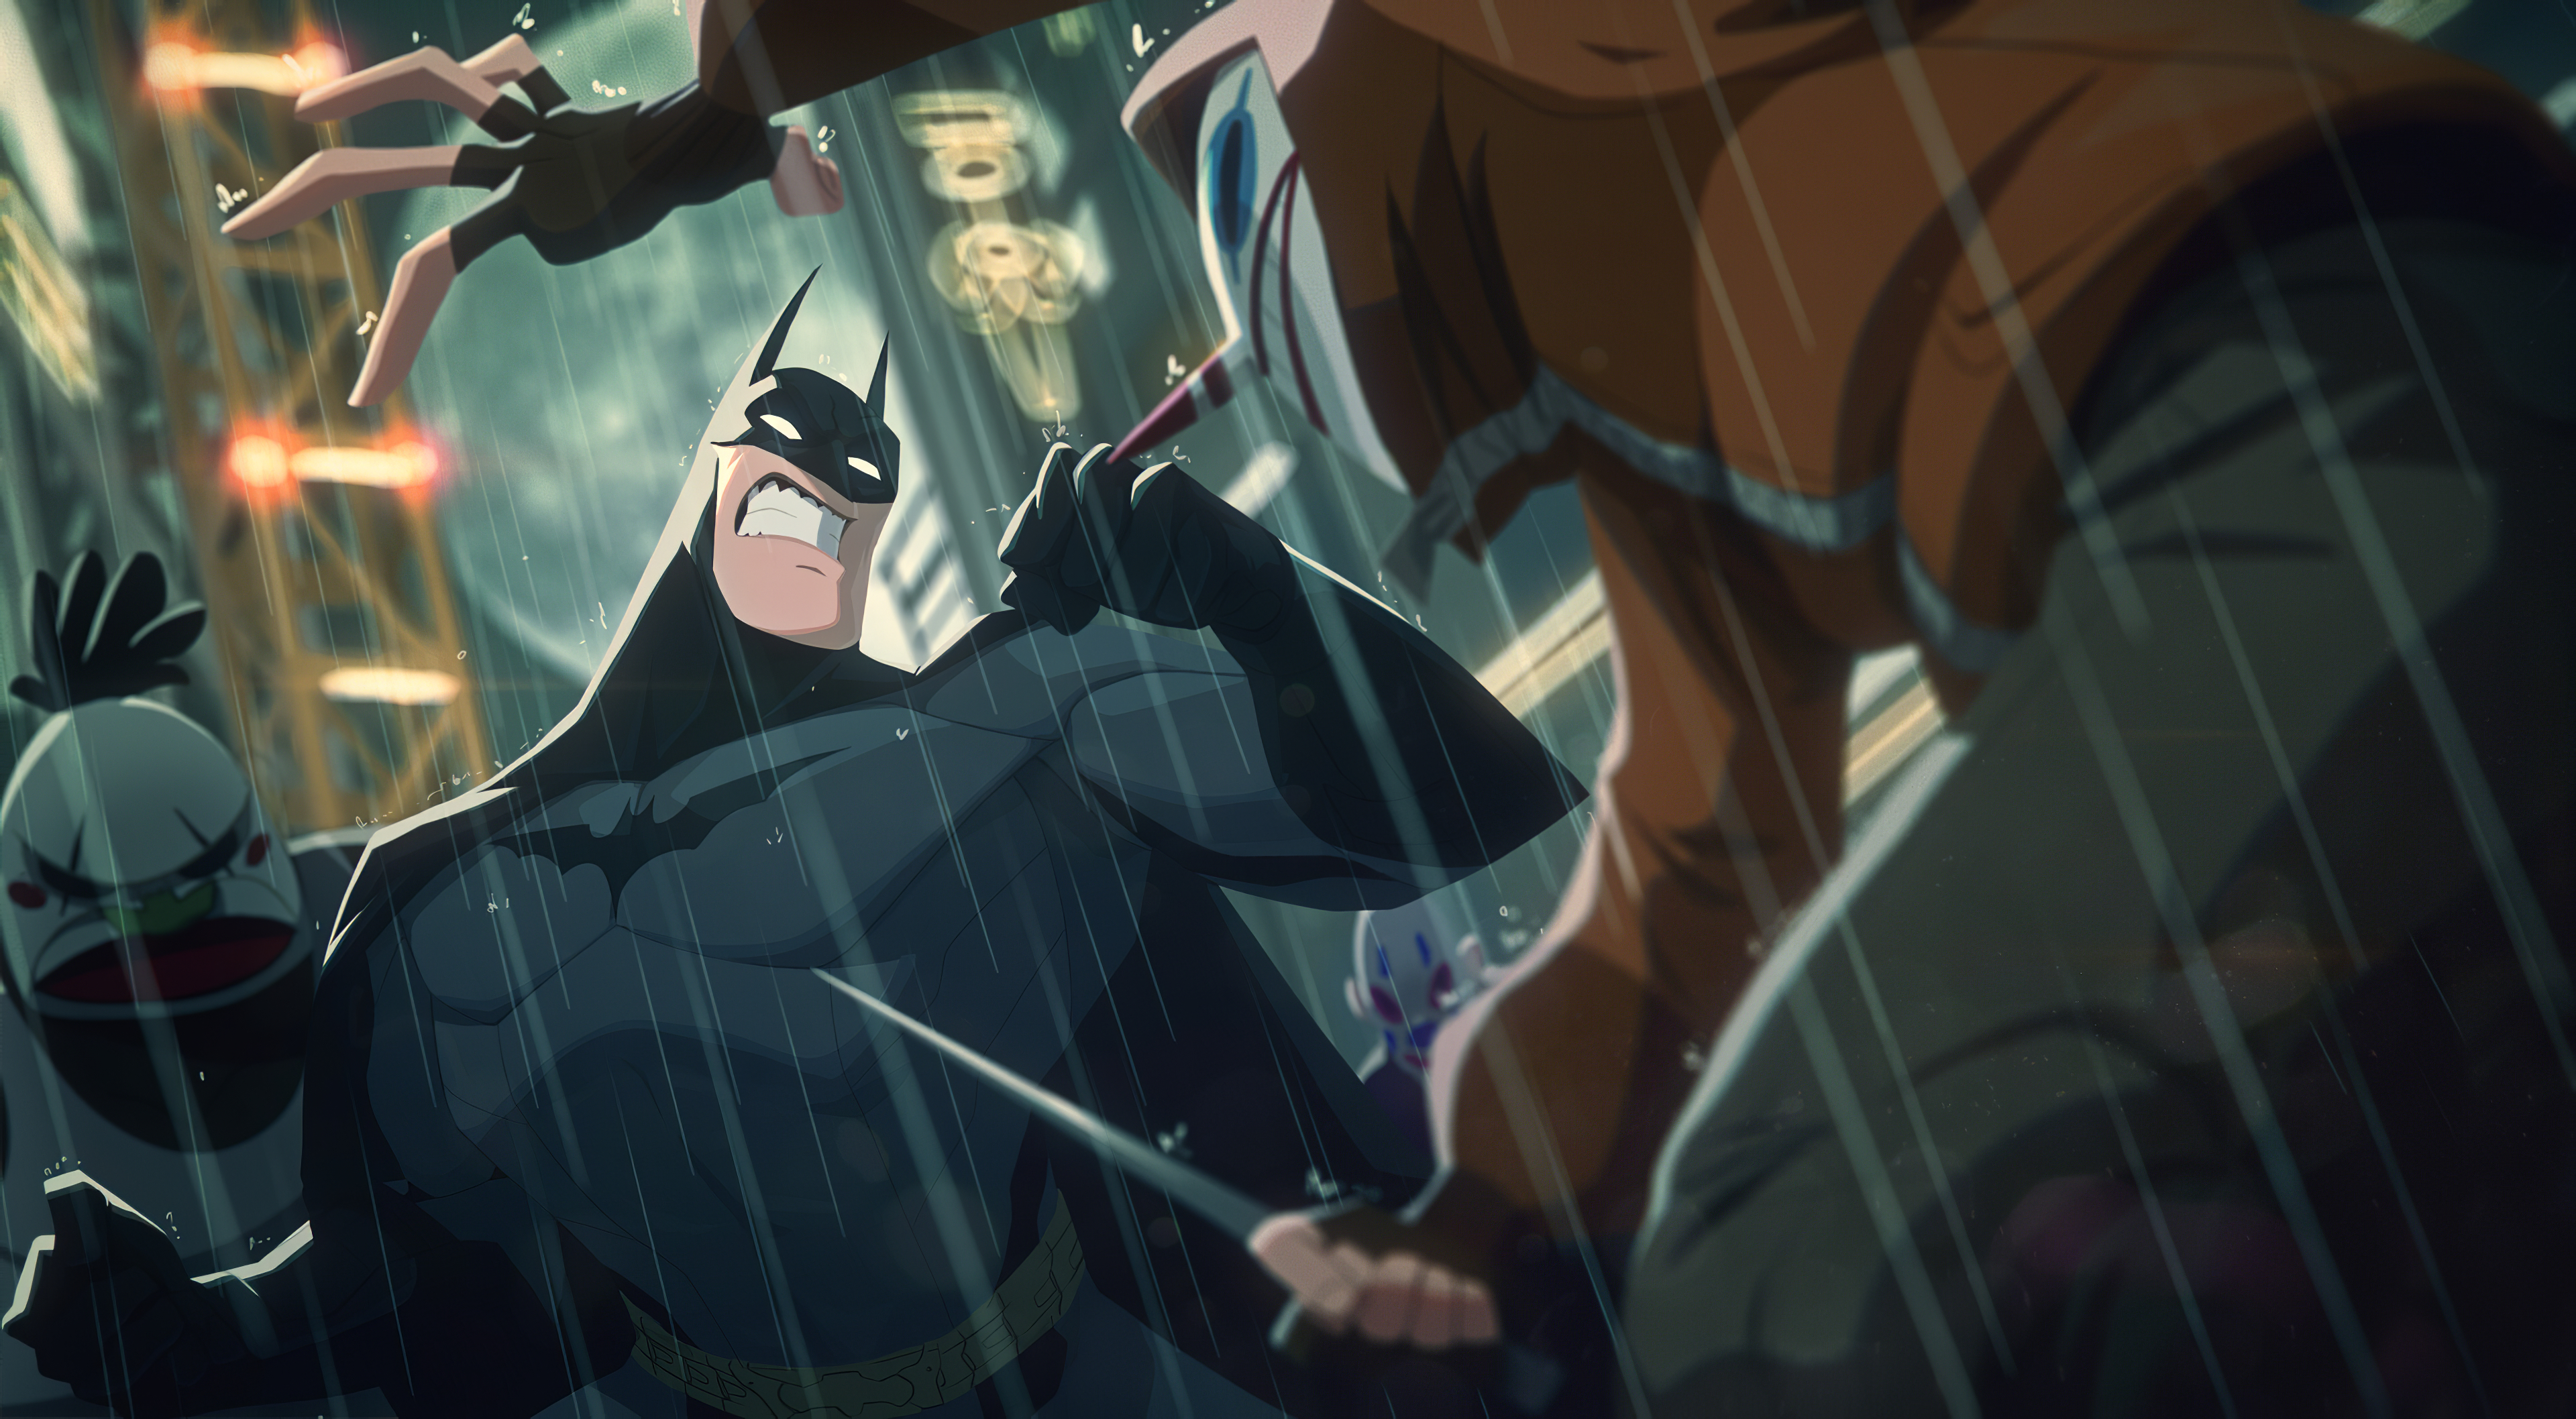 Fondos de pantalla Caricatura de Batman peleando